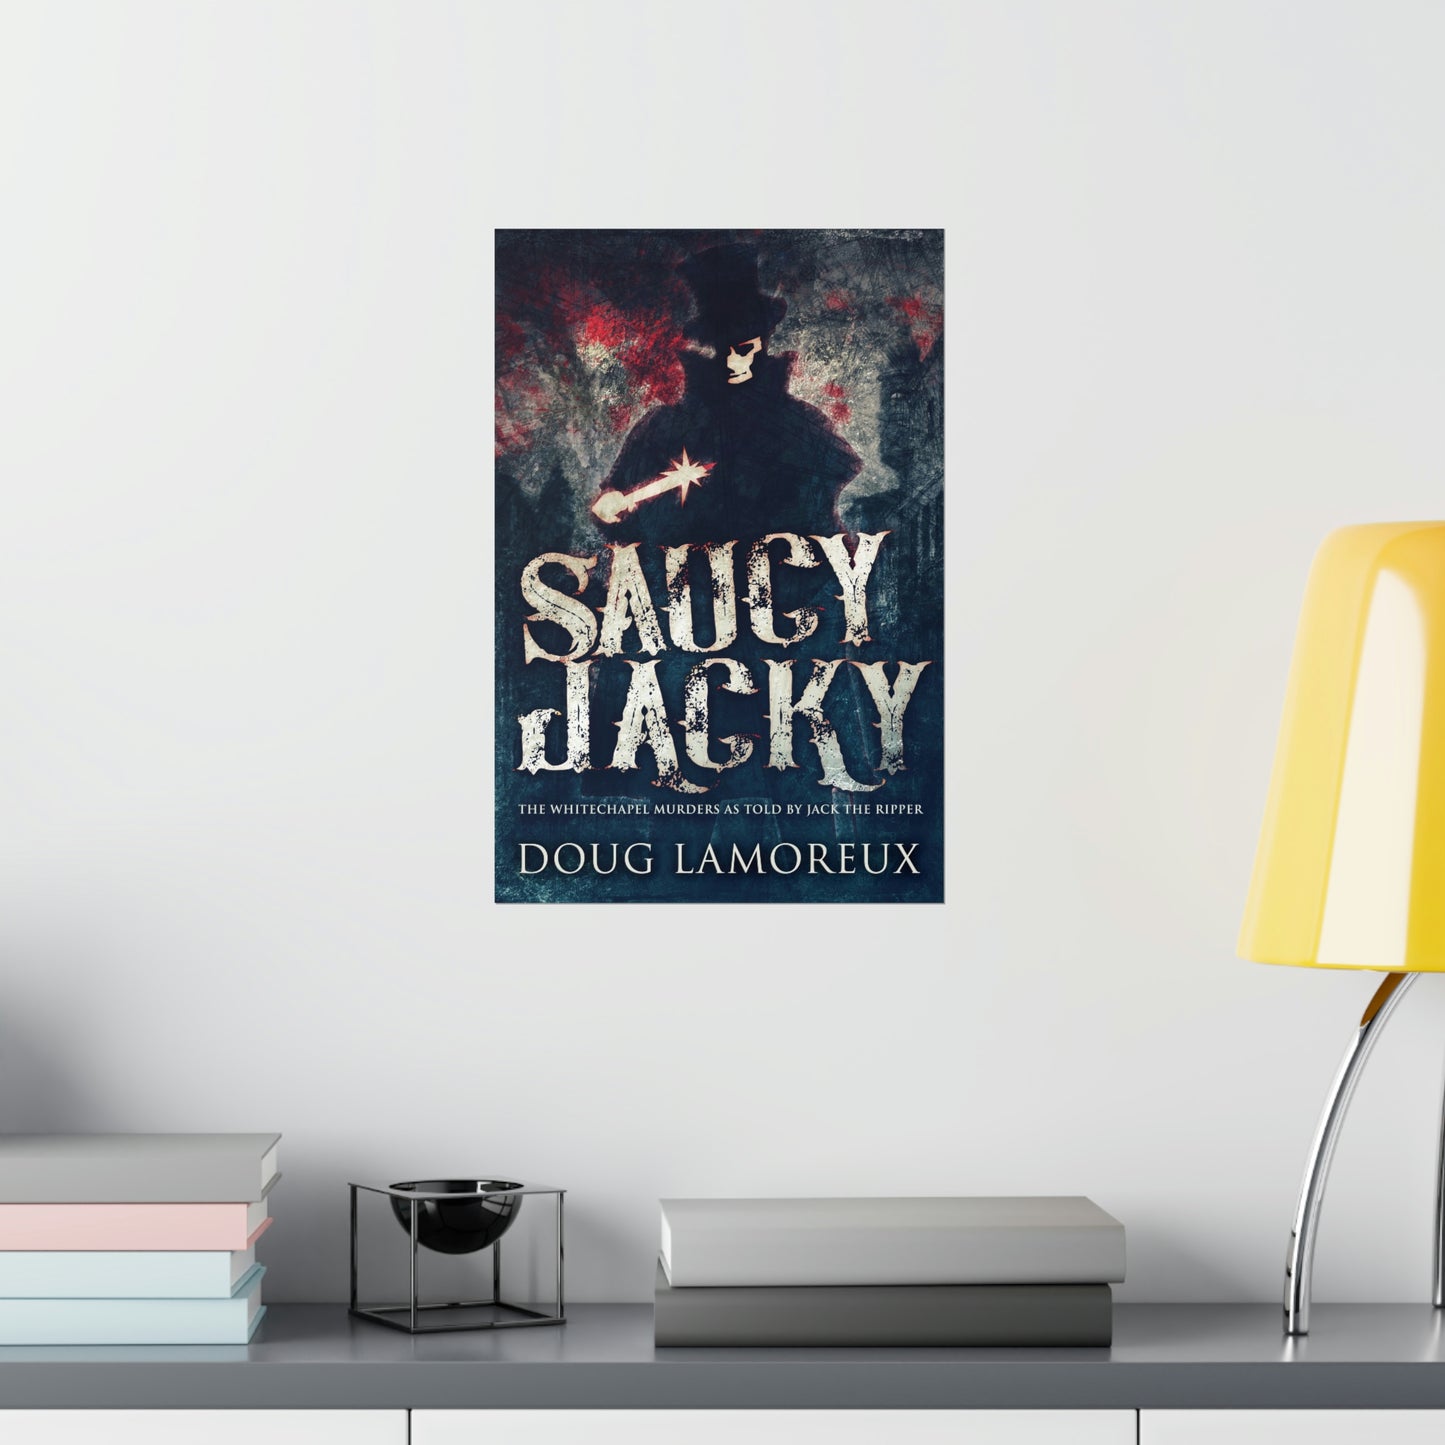 Saucy Jacky - Matte Poster